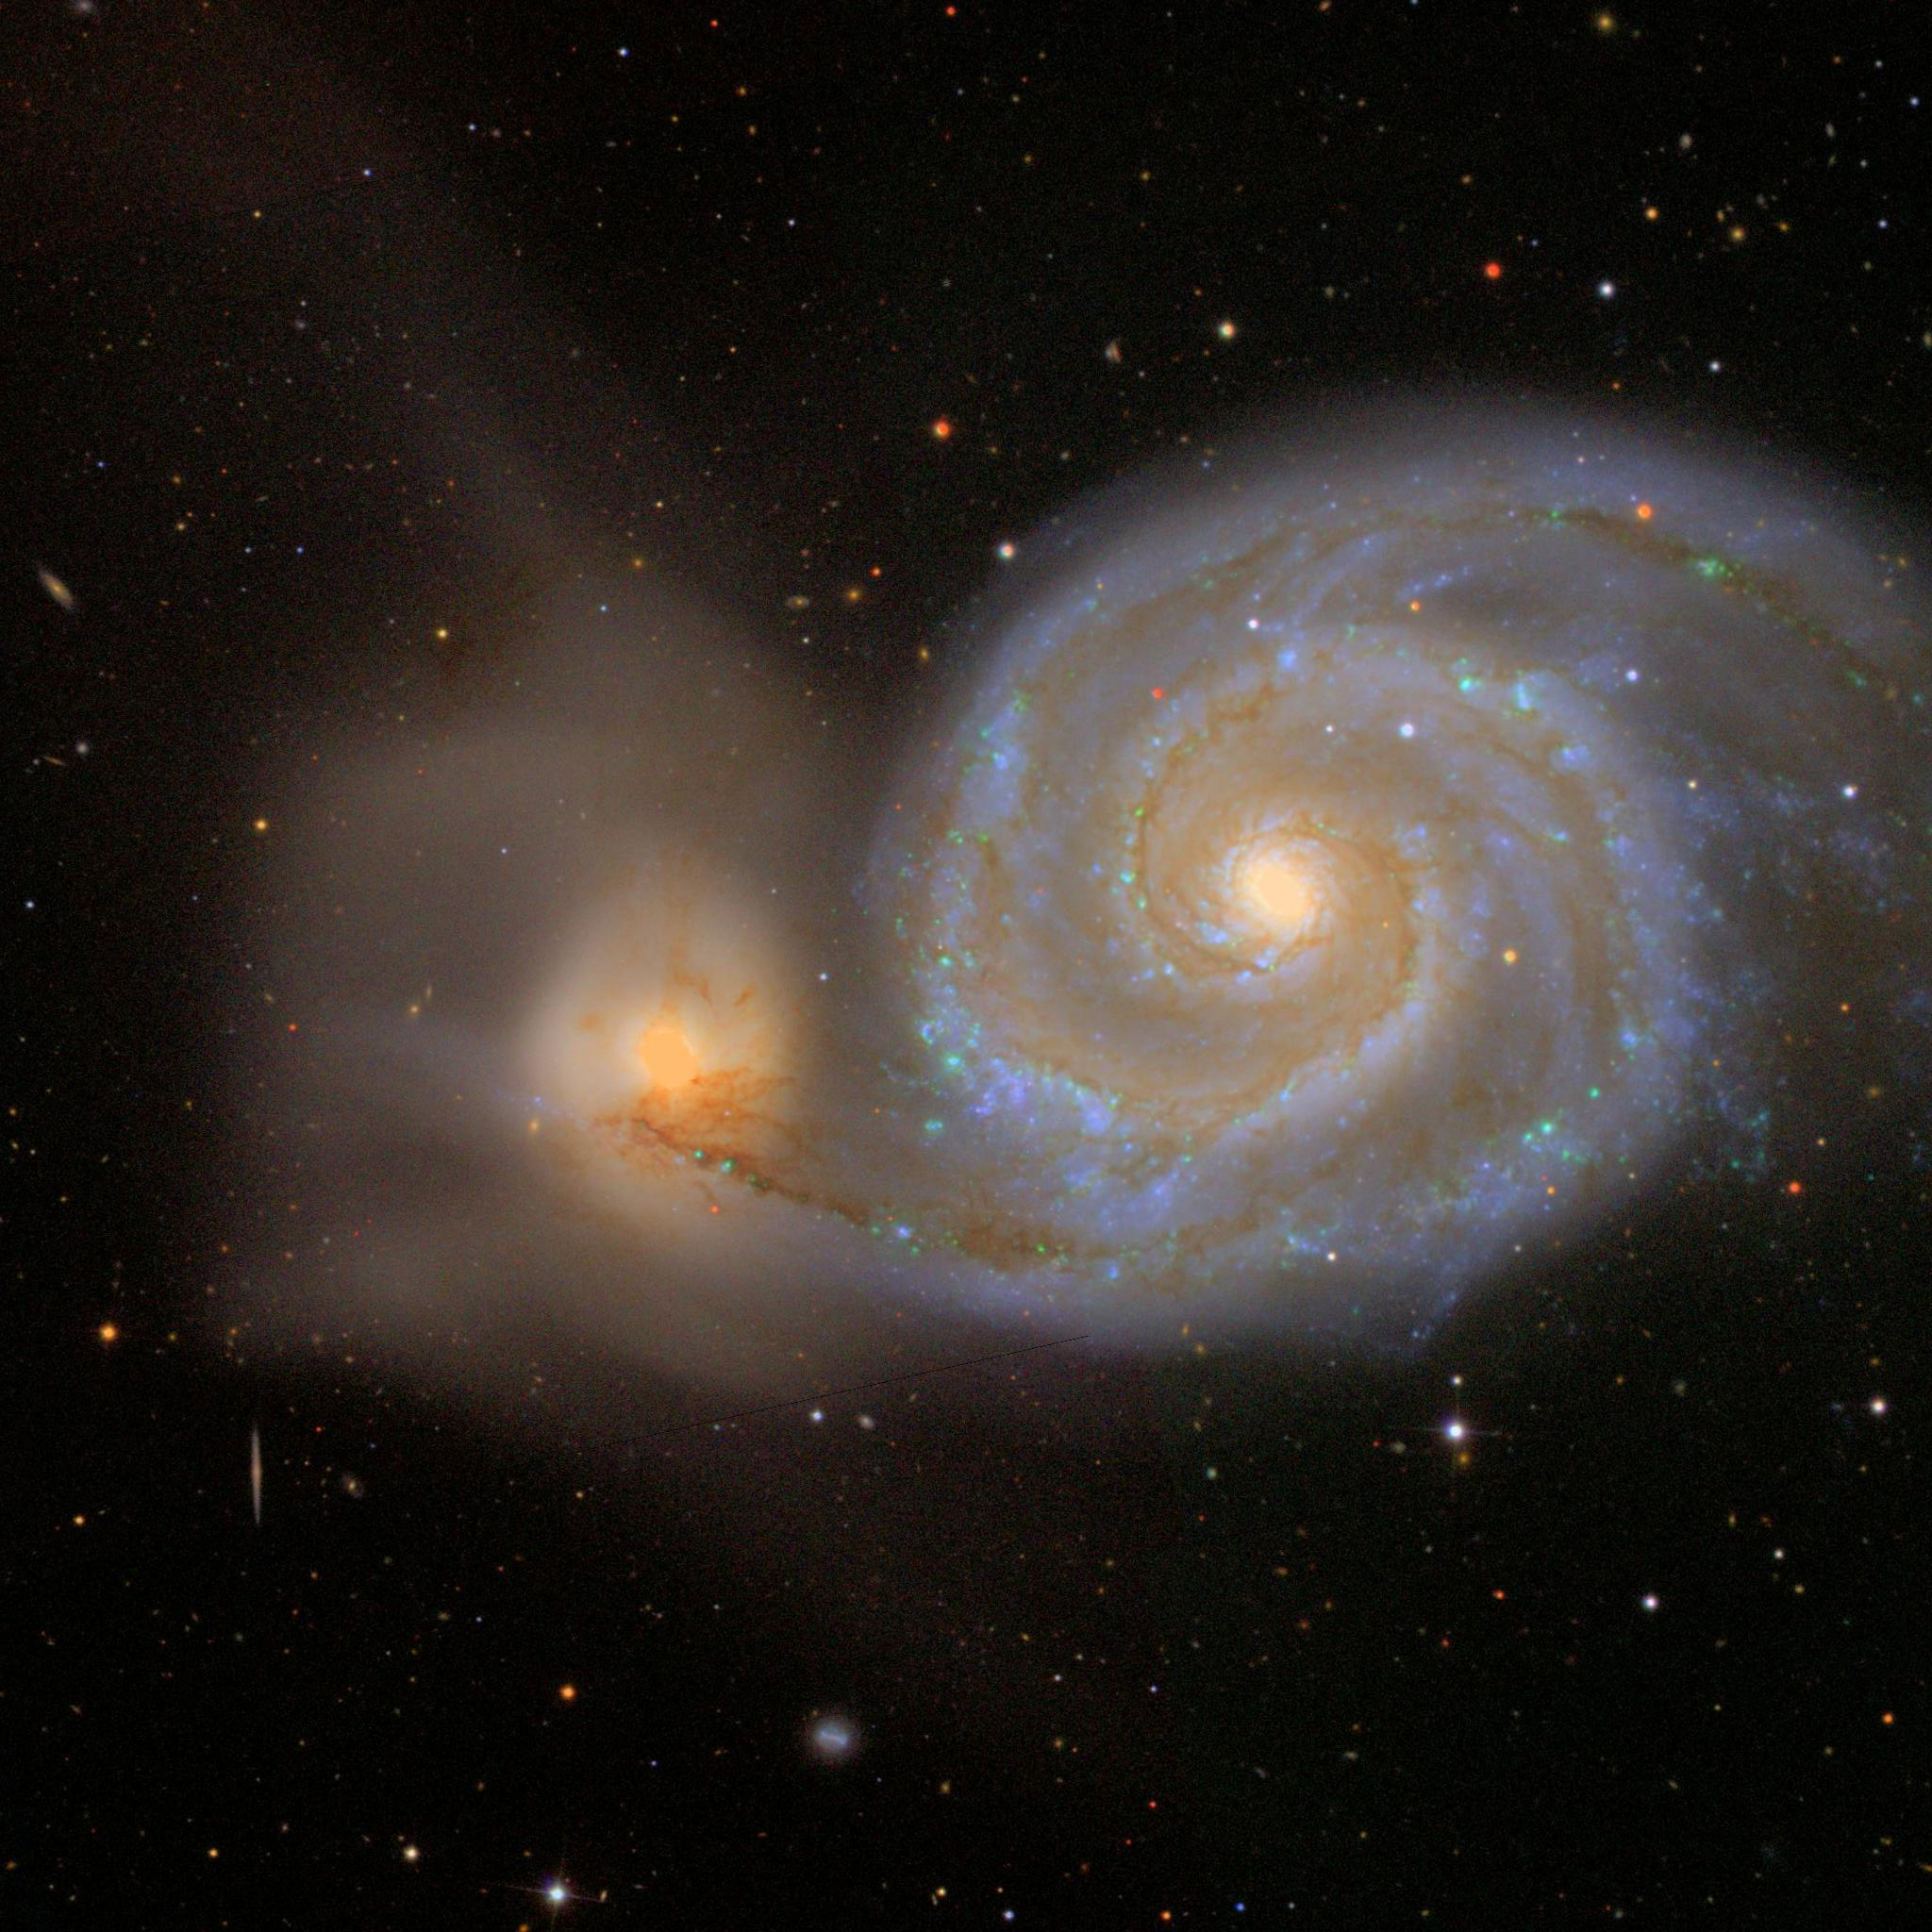 The bright spiral galaxy M51 and its fainter companion